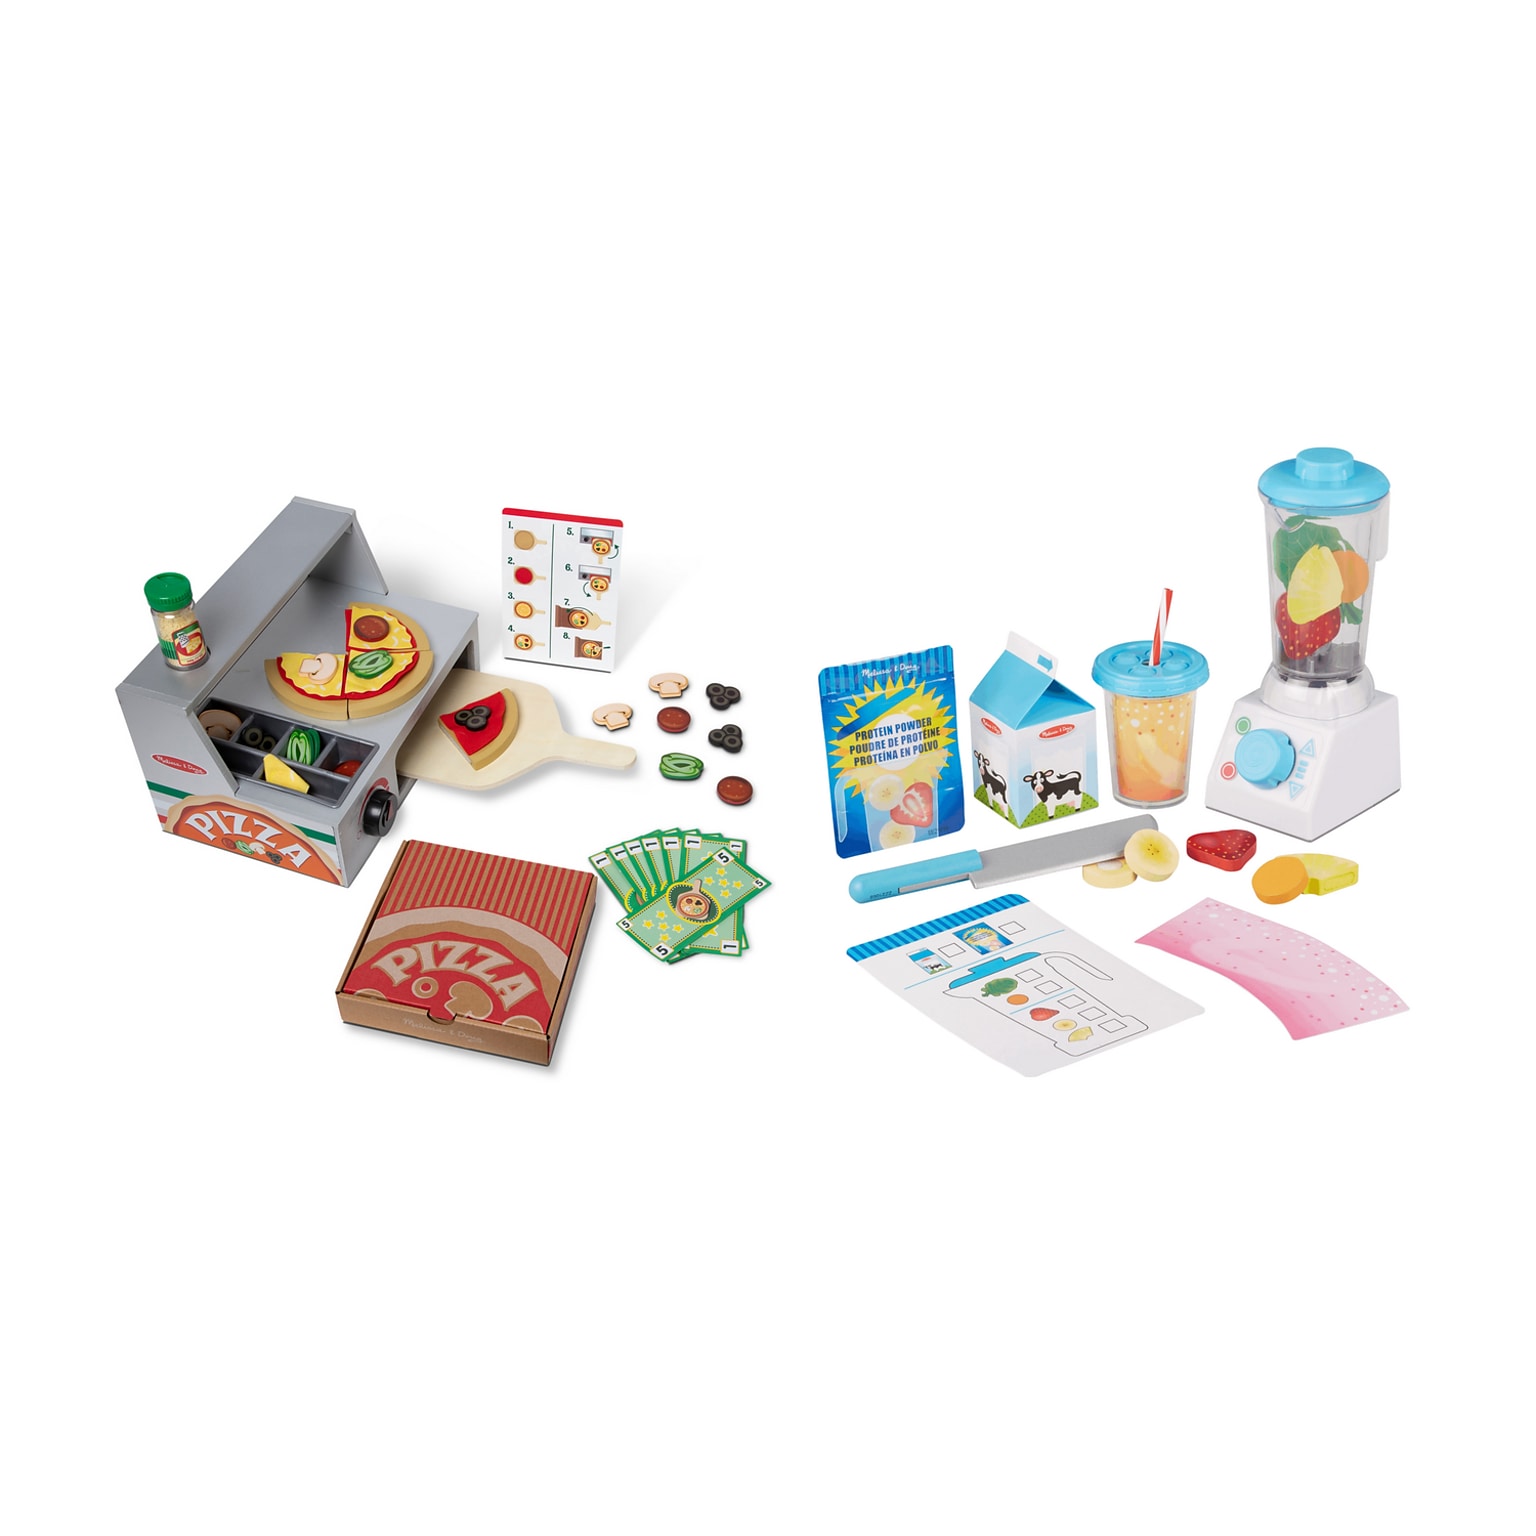 Mattel Top & Bake Pizza Counter with Smoothie Maker Blender Set, Multicolored (9465-9841-KIT)